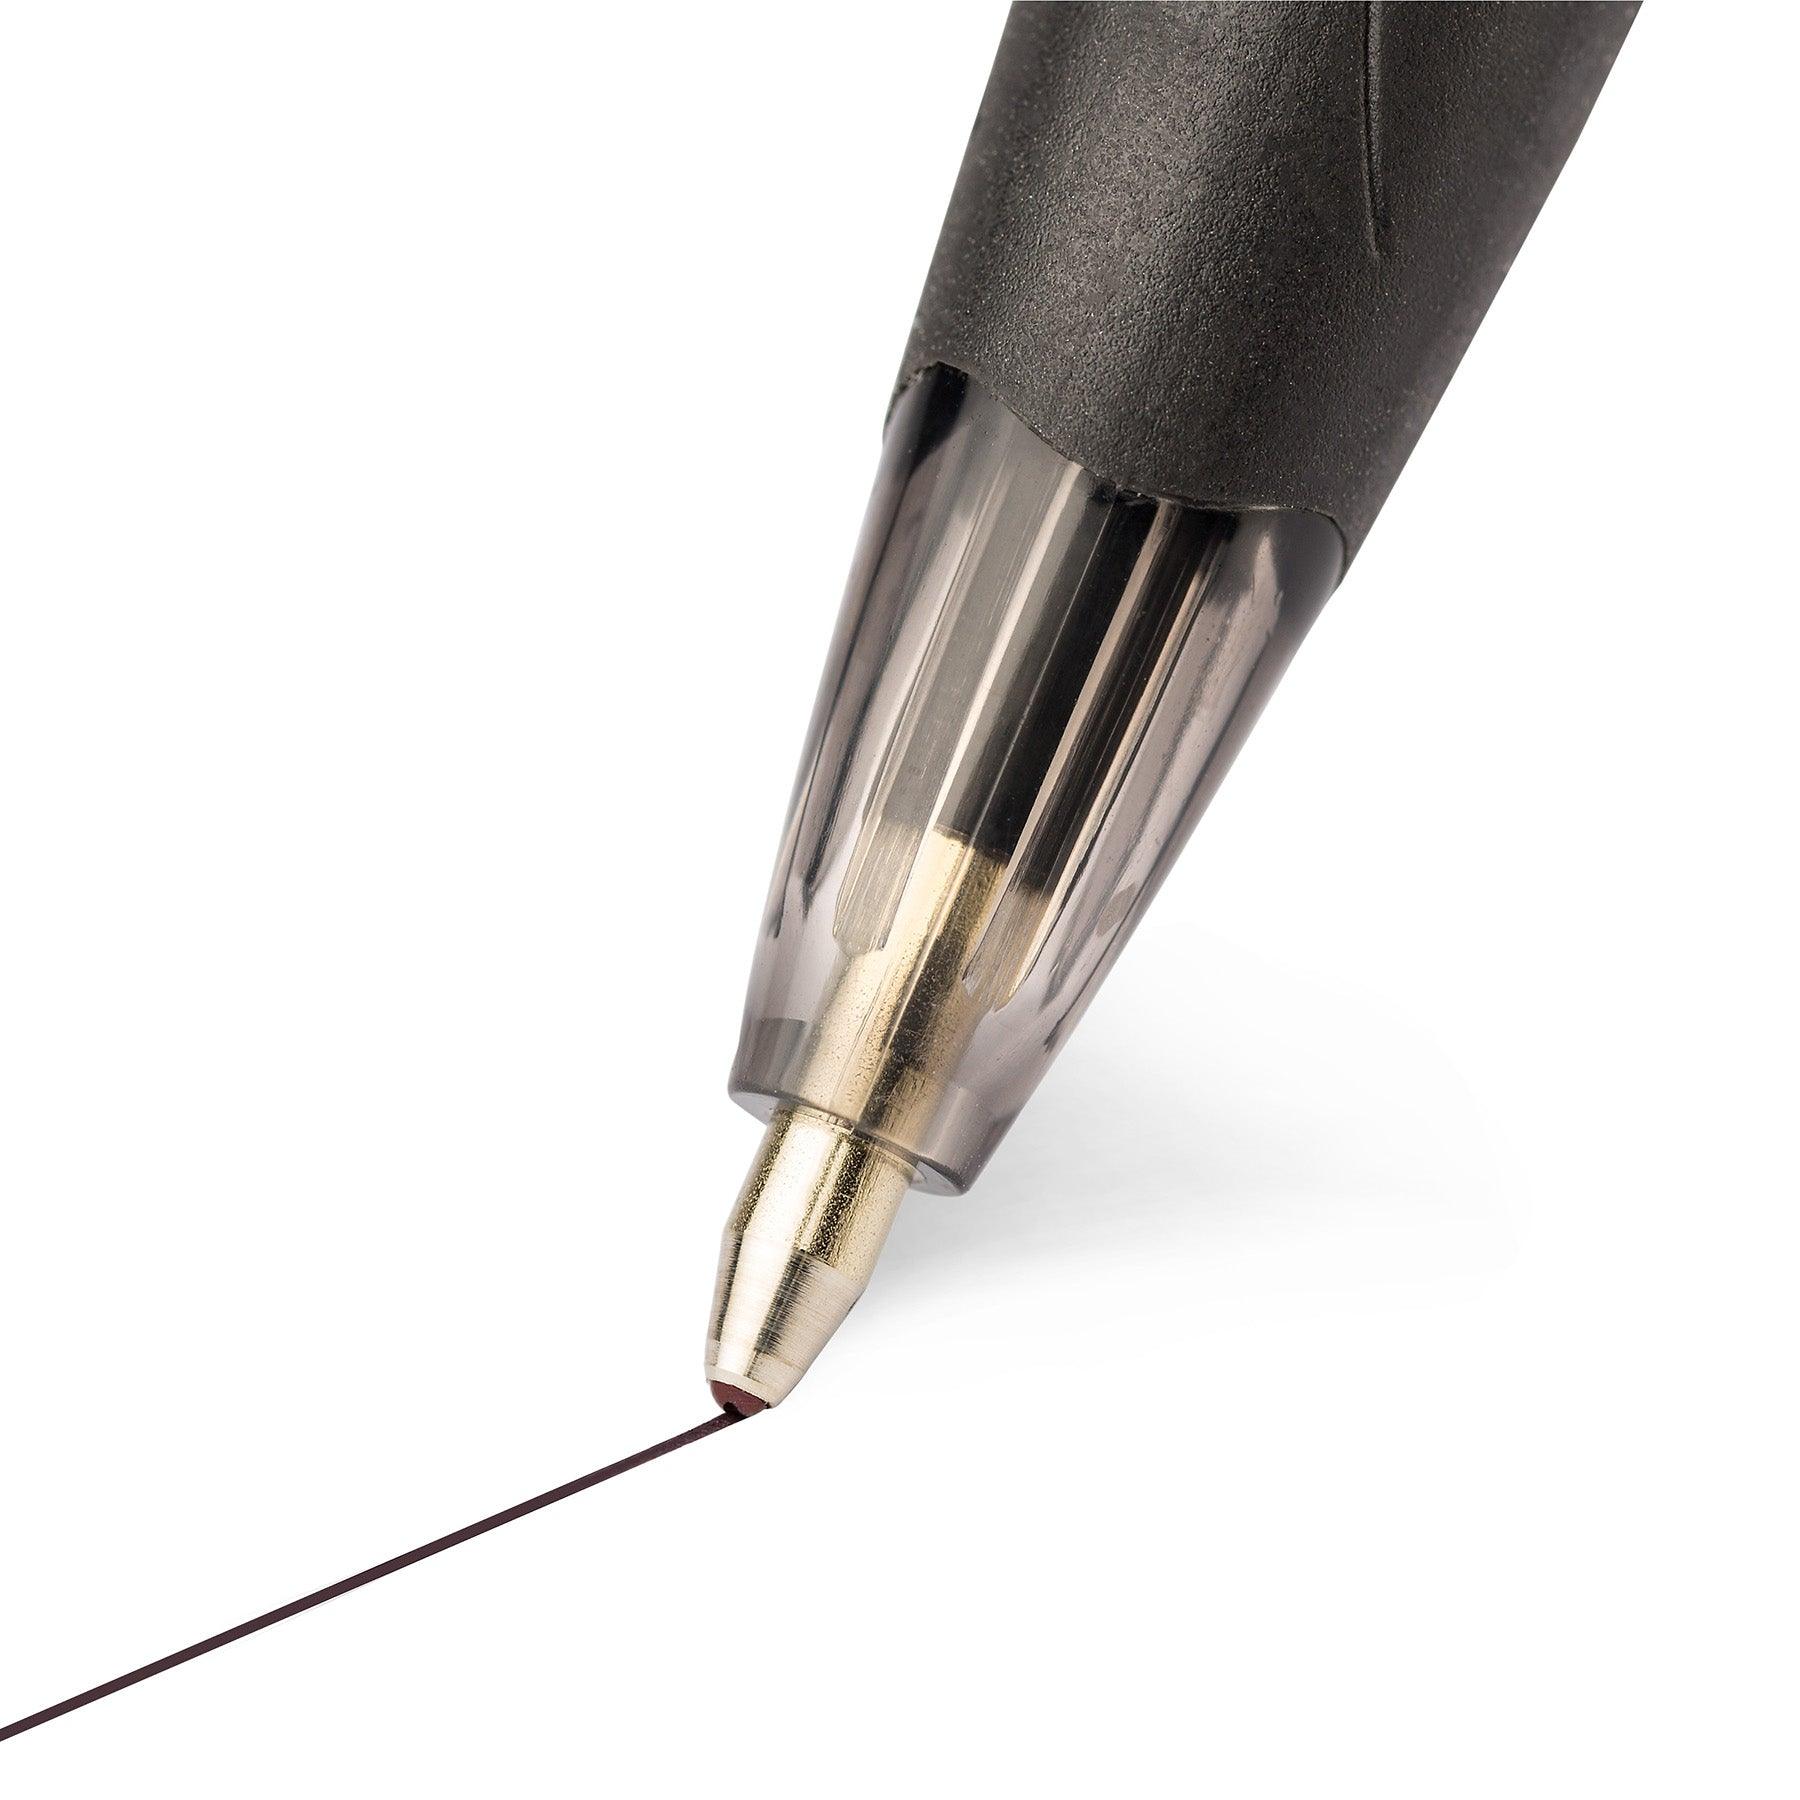 Glide™ Retractable Ball Pen, Medium Point (1.0 mm), Black, 12-Count - Loomini